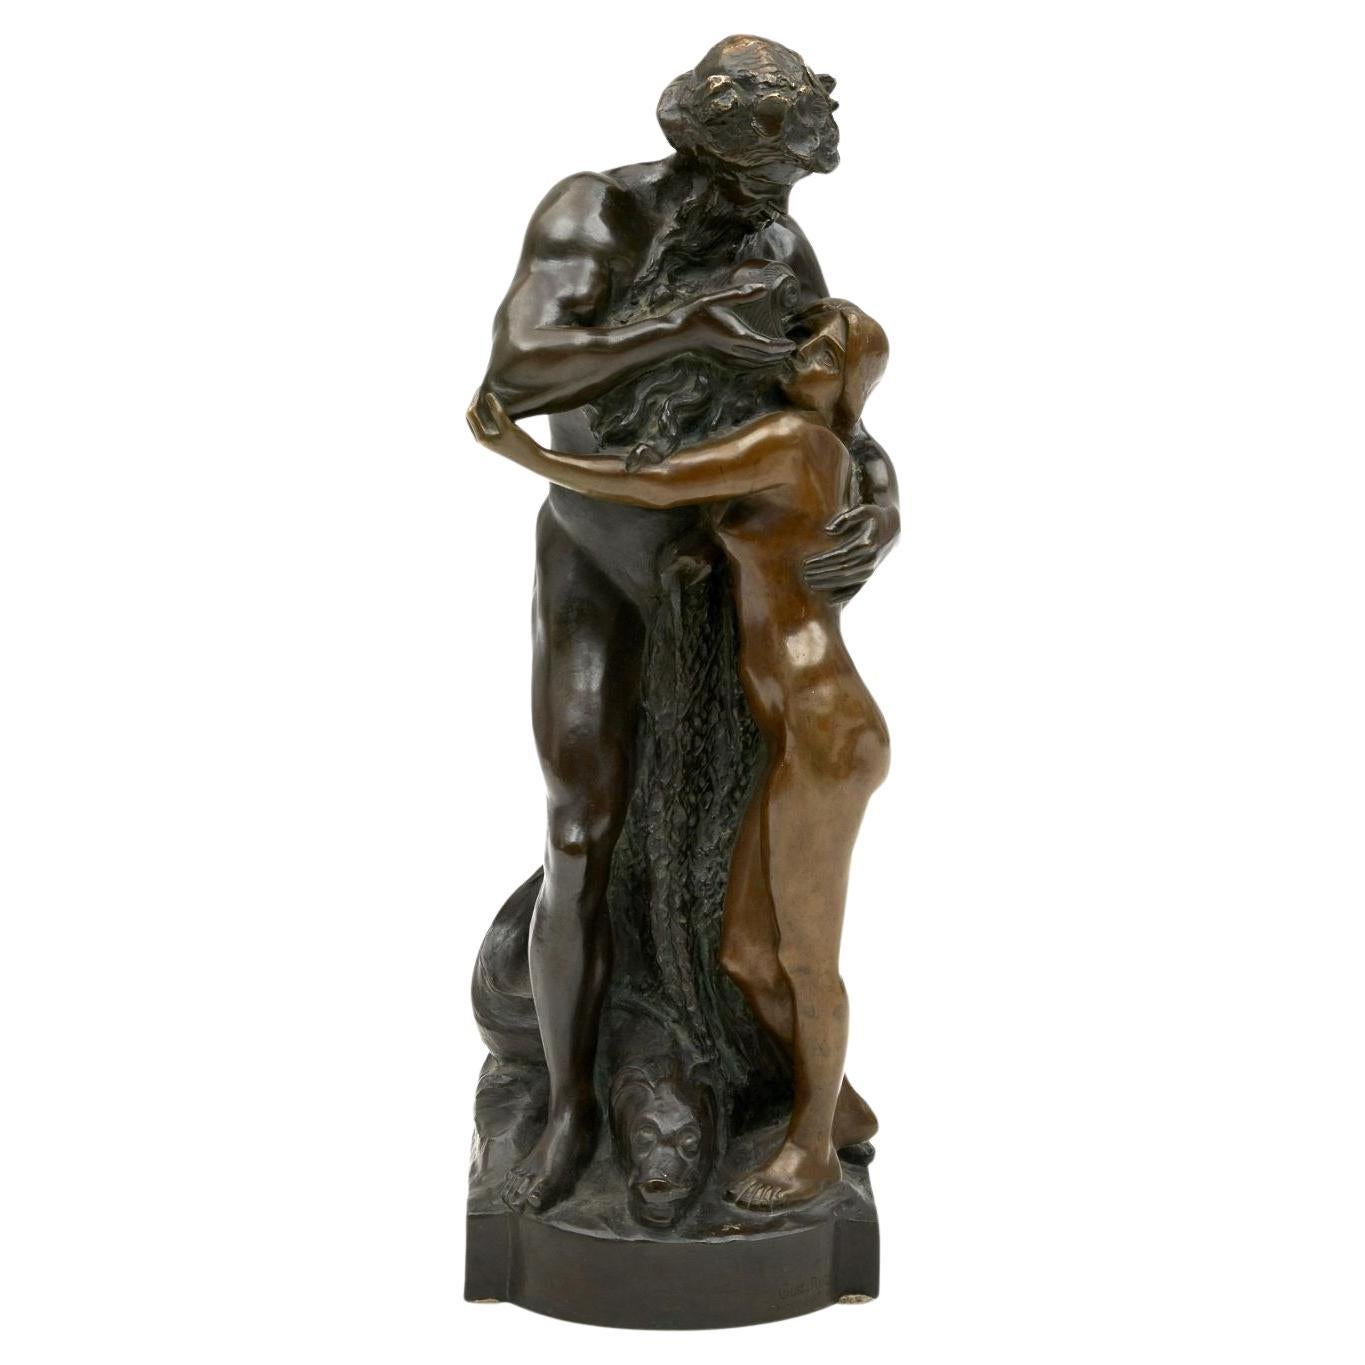 Greek Poseidon and Amphitrite Bronze Sculpture by Karl Gustav Rutz (1857-1949)